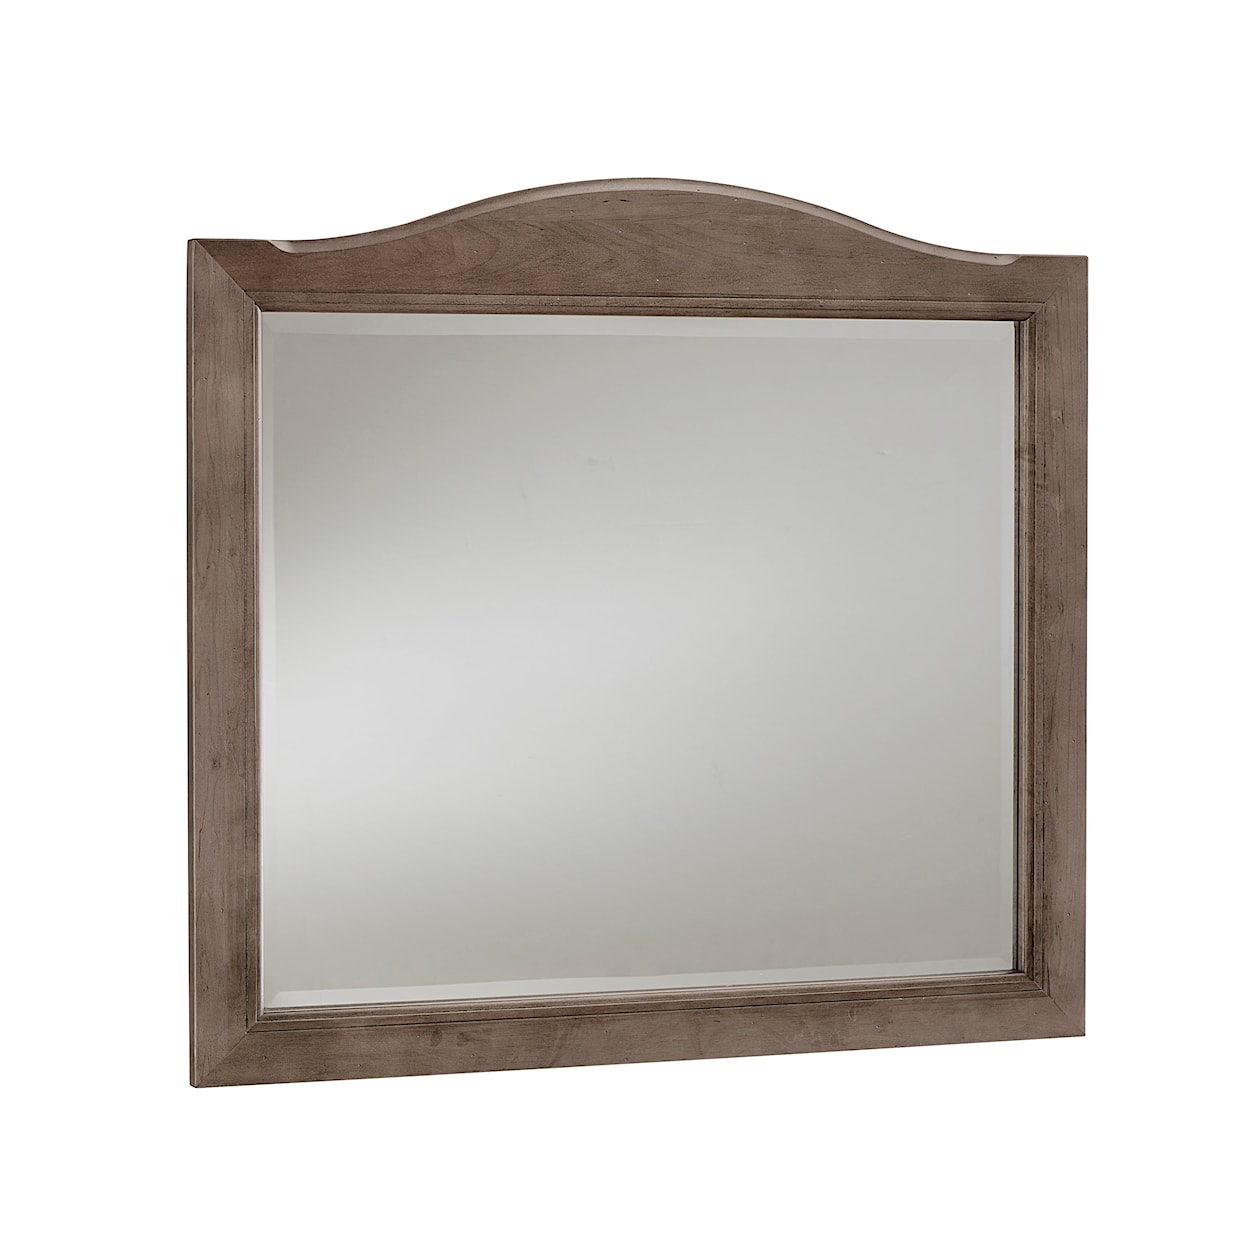 Vaughan-Bassett Cool Farmhouse Arched Mirror